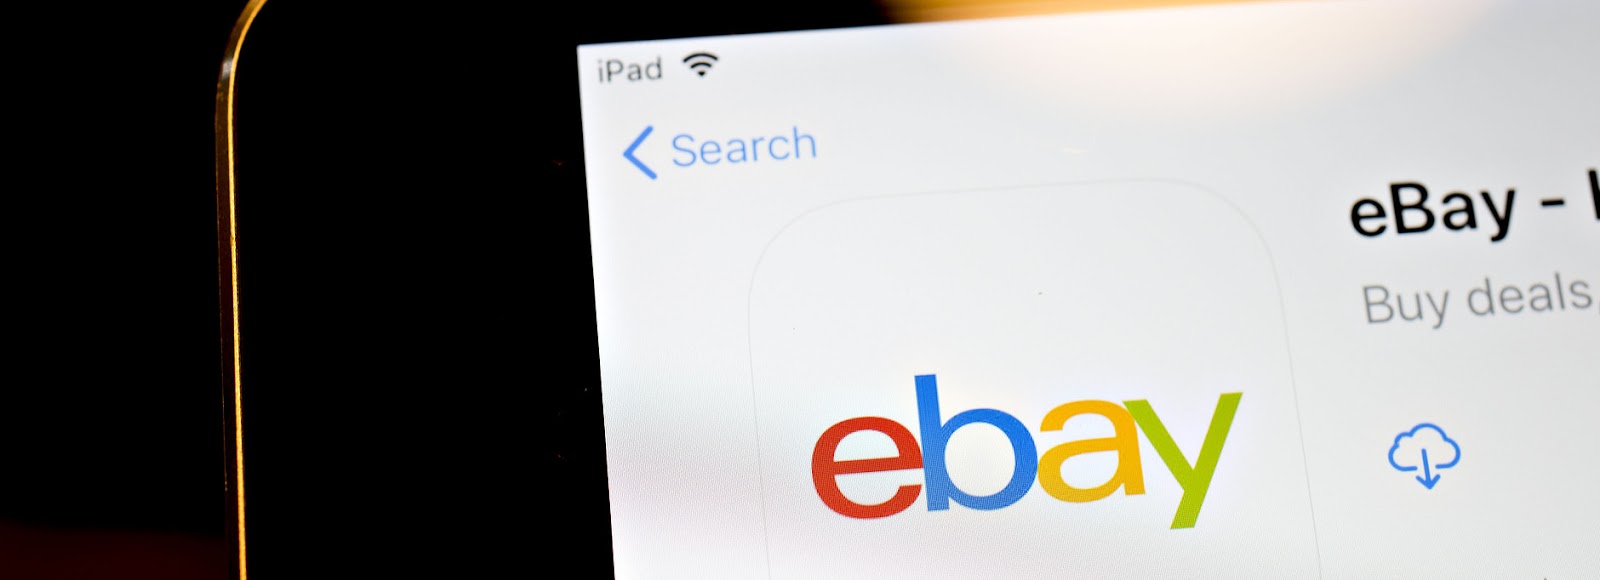 eBay – The largest online bid eCommerce website